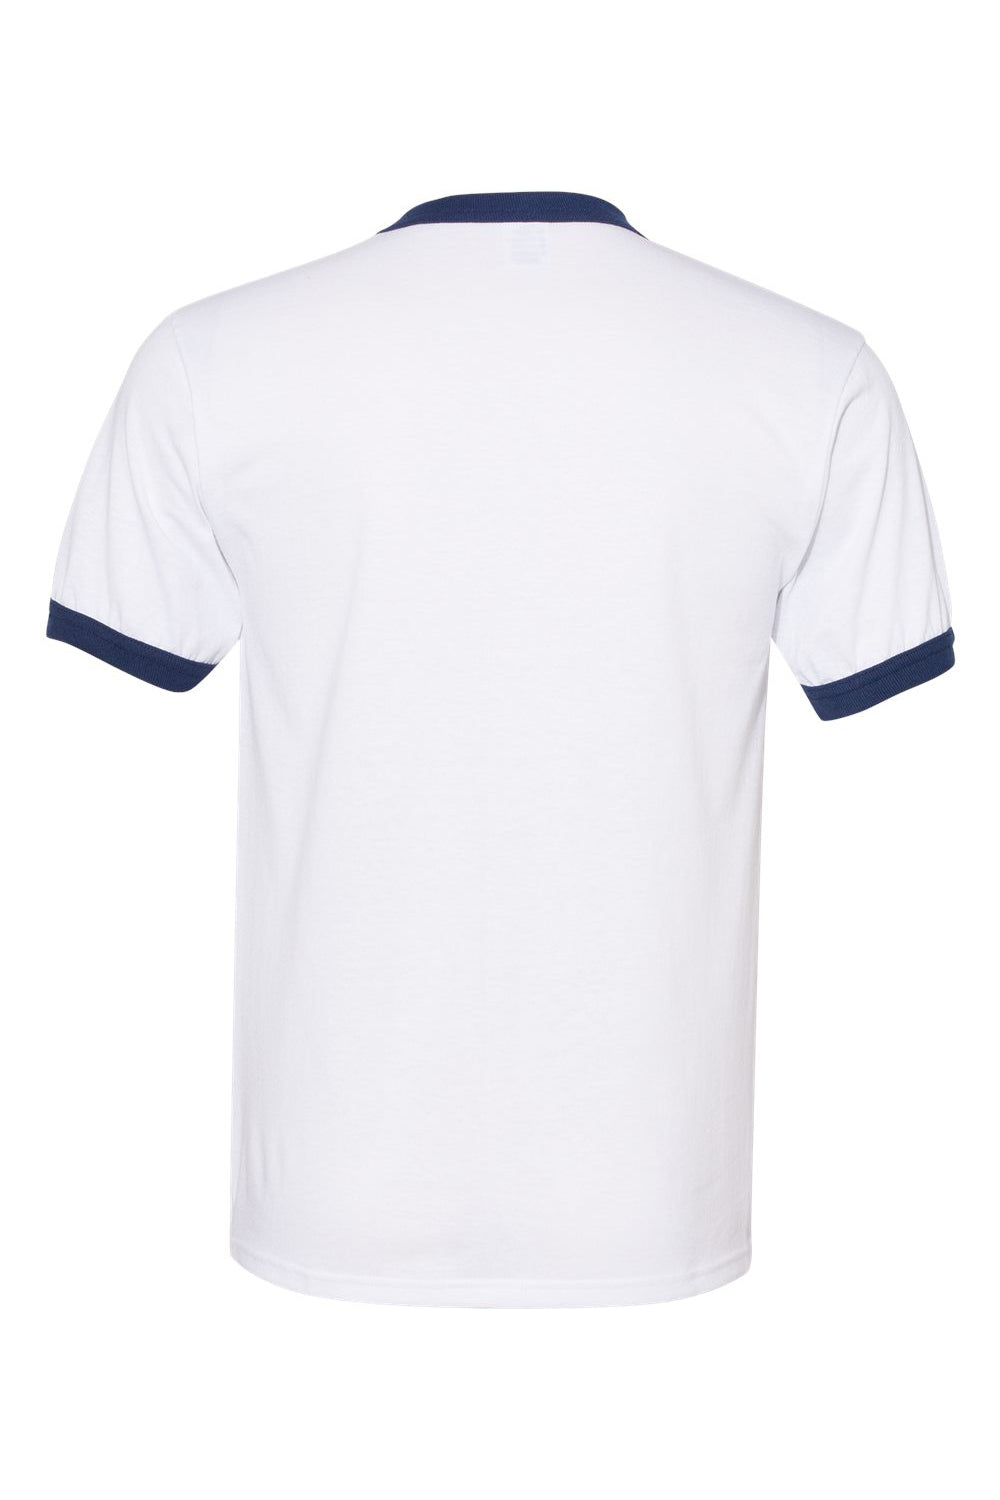 Augusta Sportswear 710 Mens Ringer Short Sleeve Crewneck T-Shirt White/Navy Flat Back